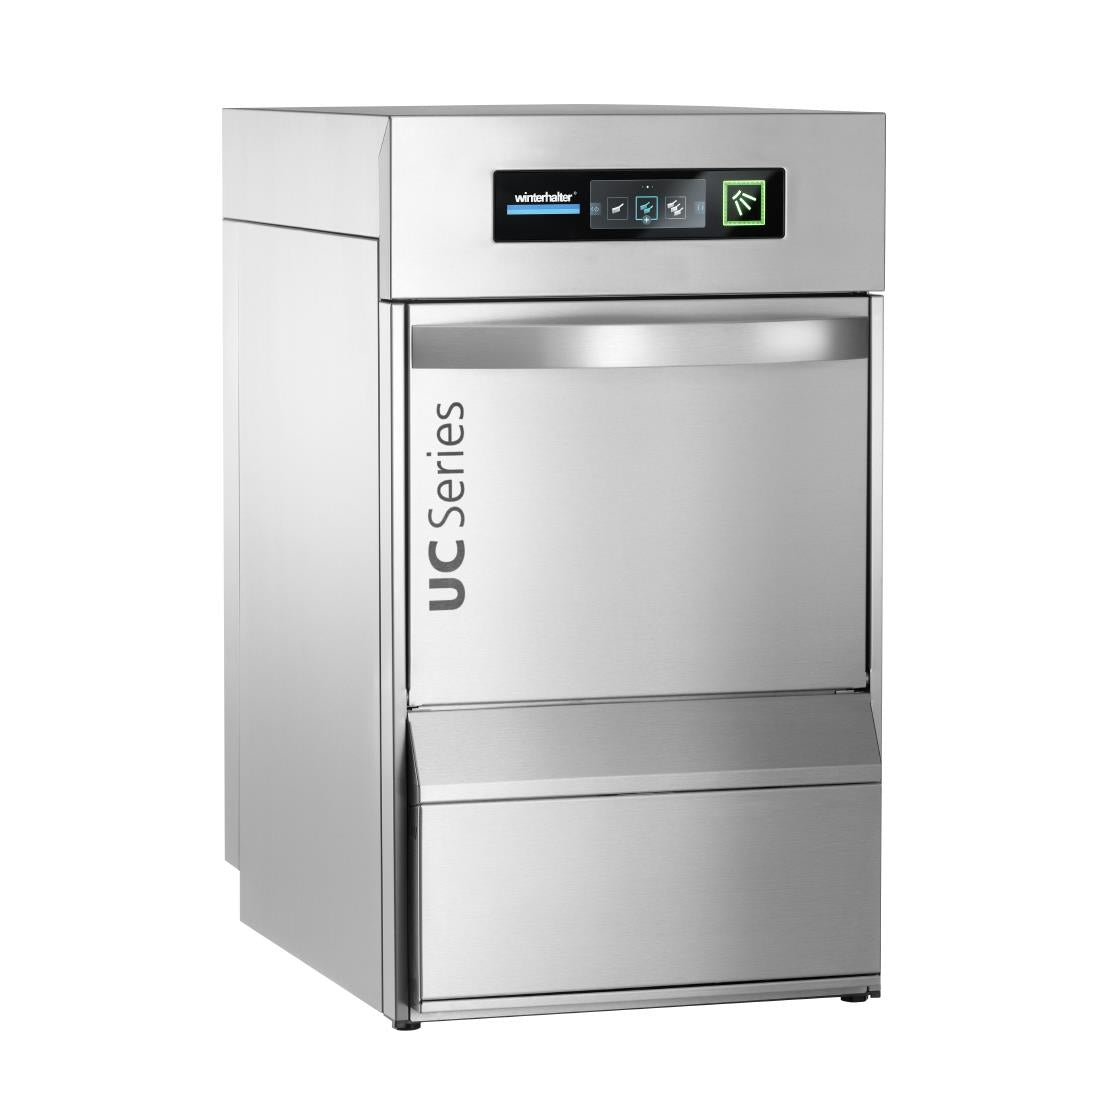 GF419 Winterhalter Undercounter Dishwasher UC-XL-E Energy JD Catering Equipment Solutions Ltd